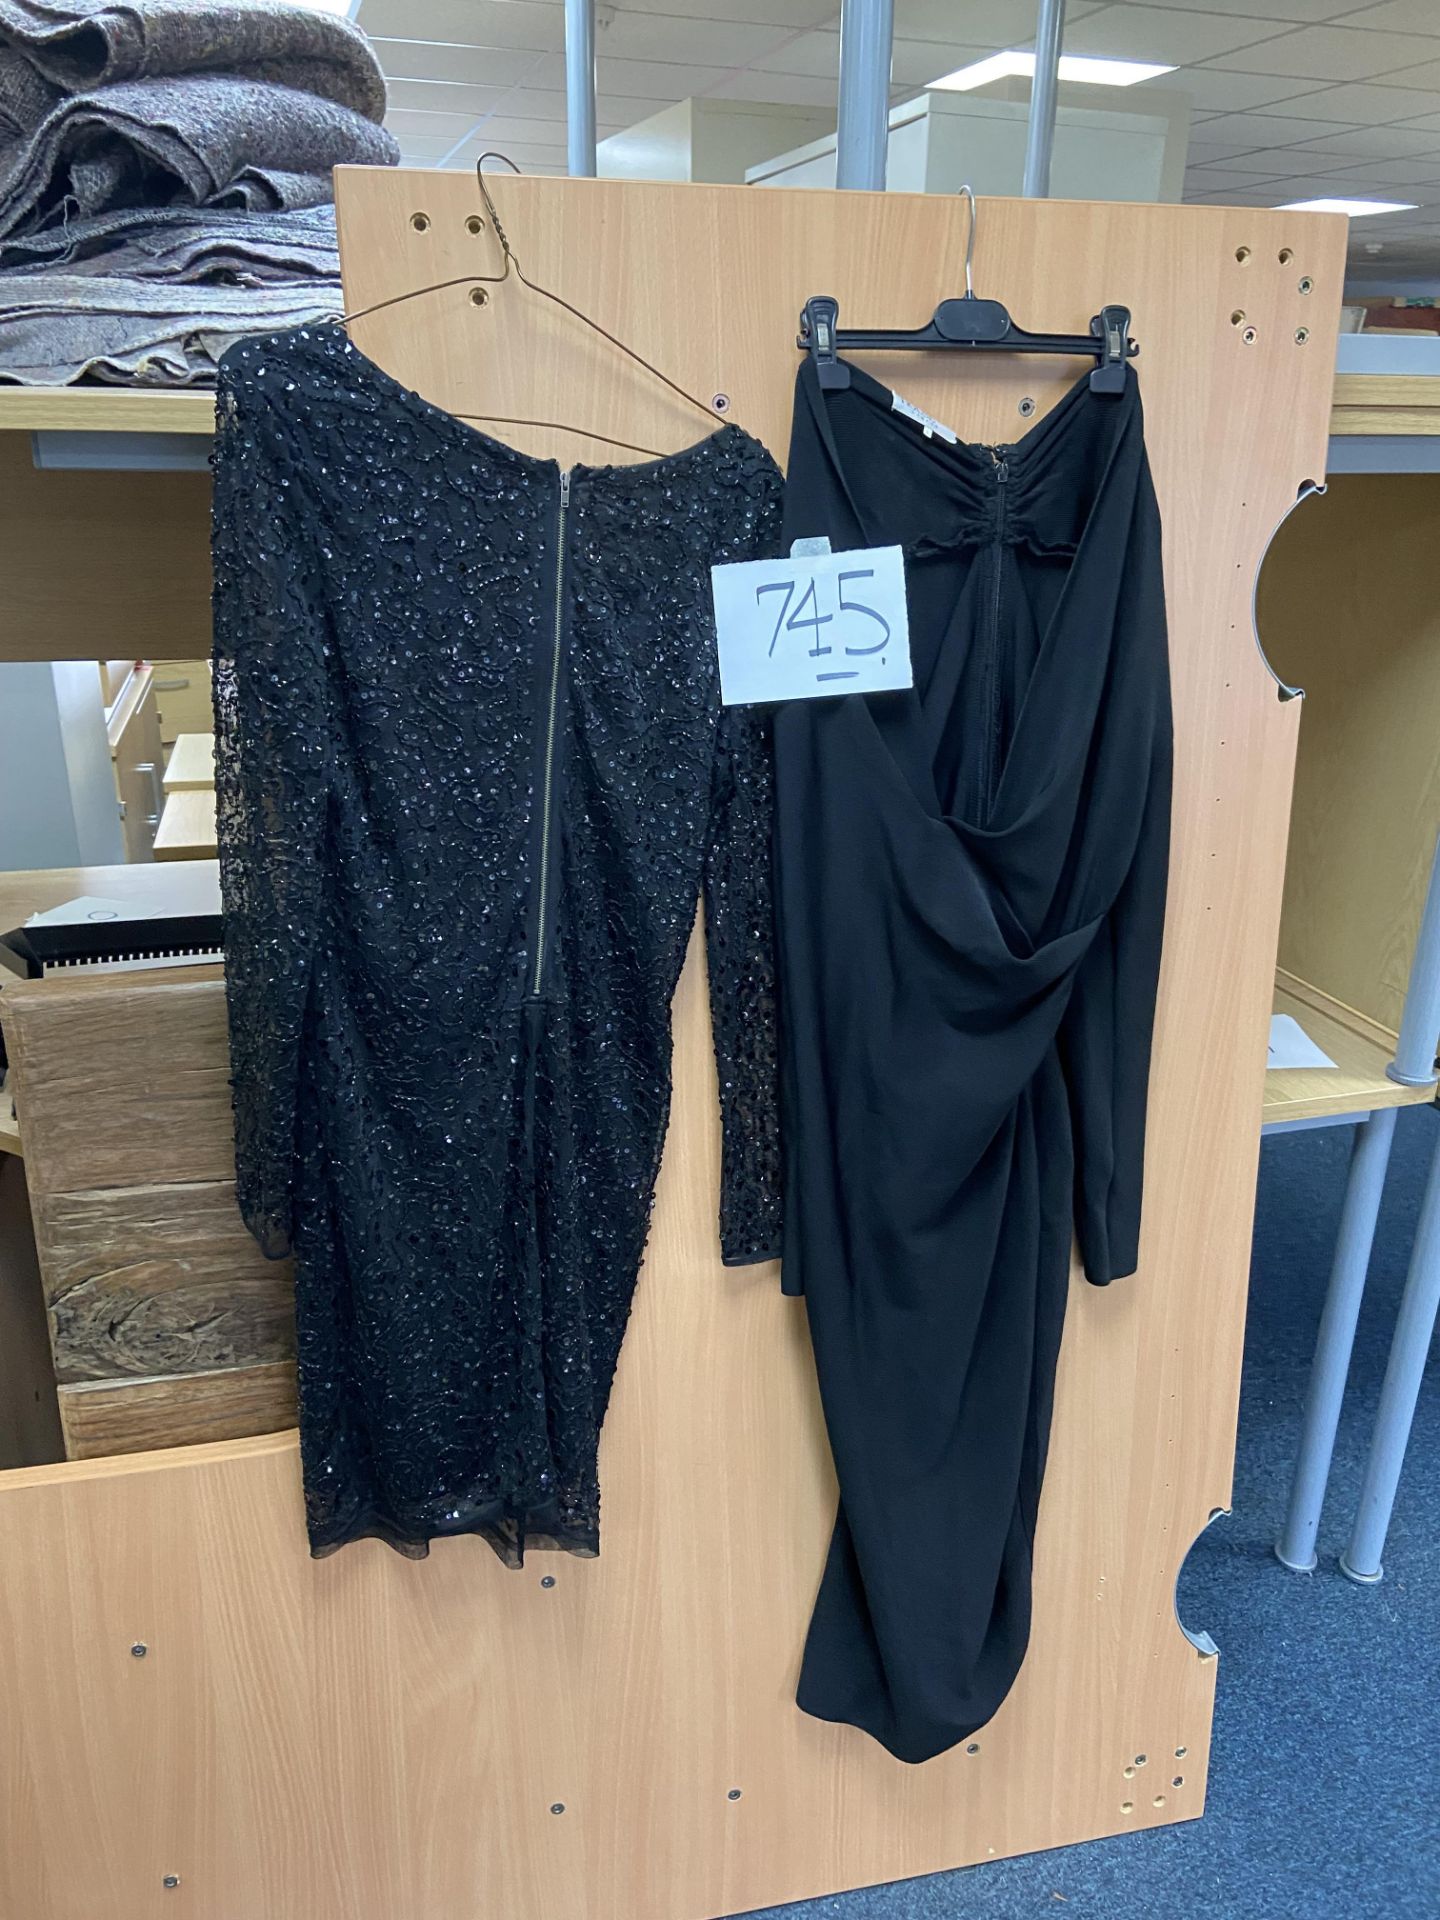 2 black dresses size 10